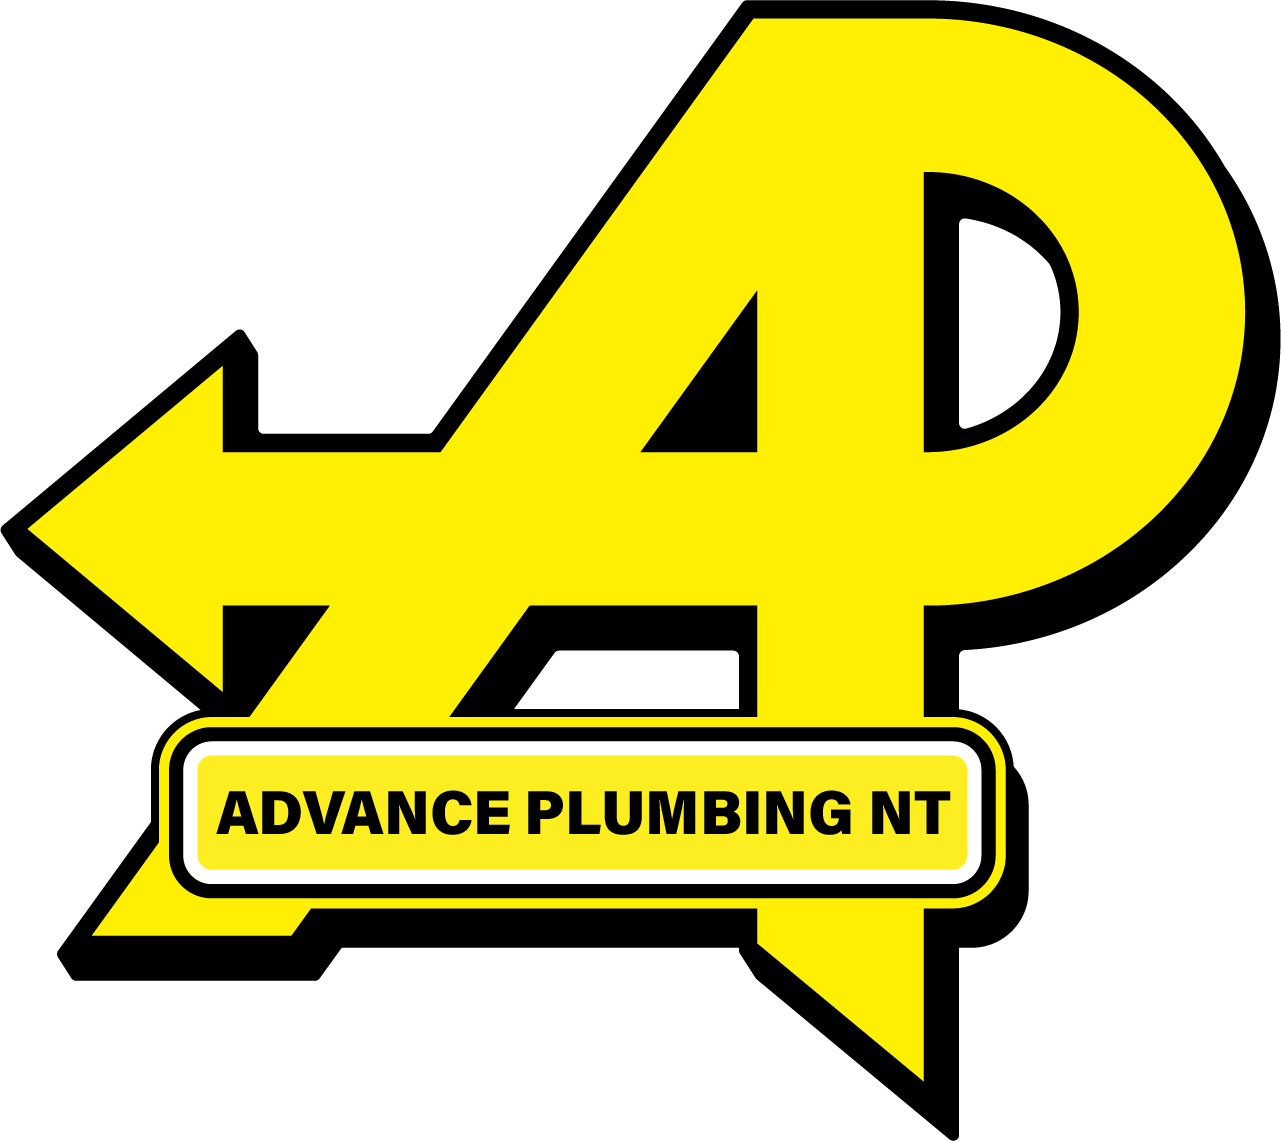 Advance Plumbing (NT) Pty Ltd